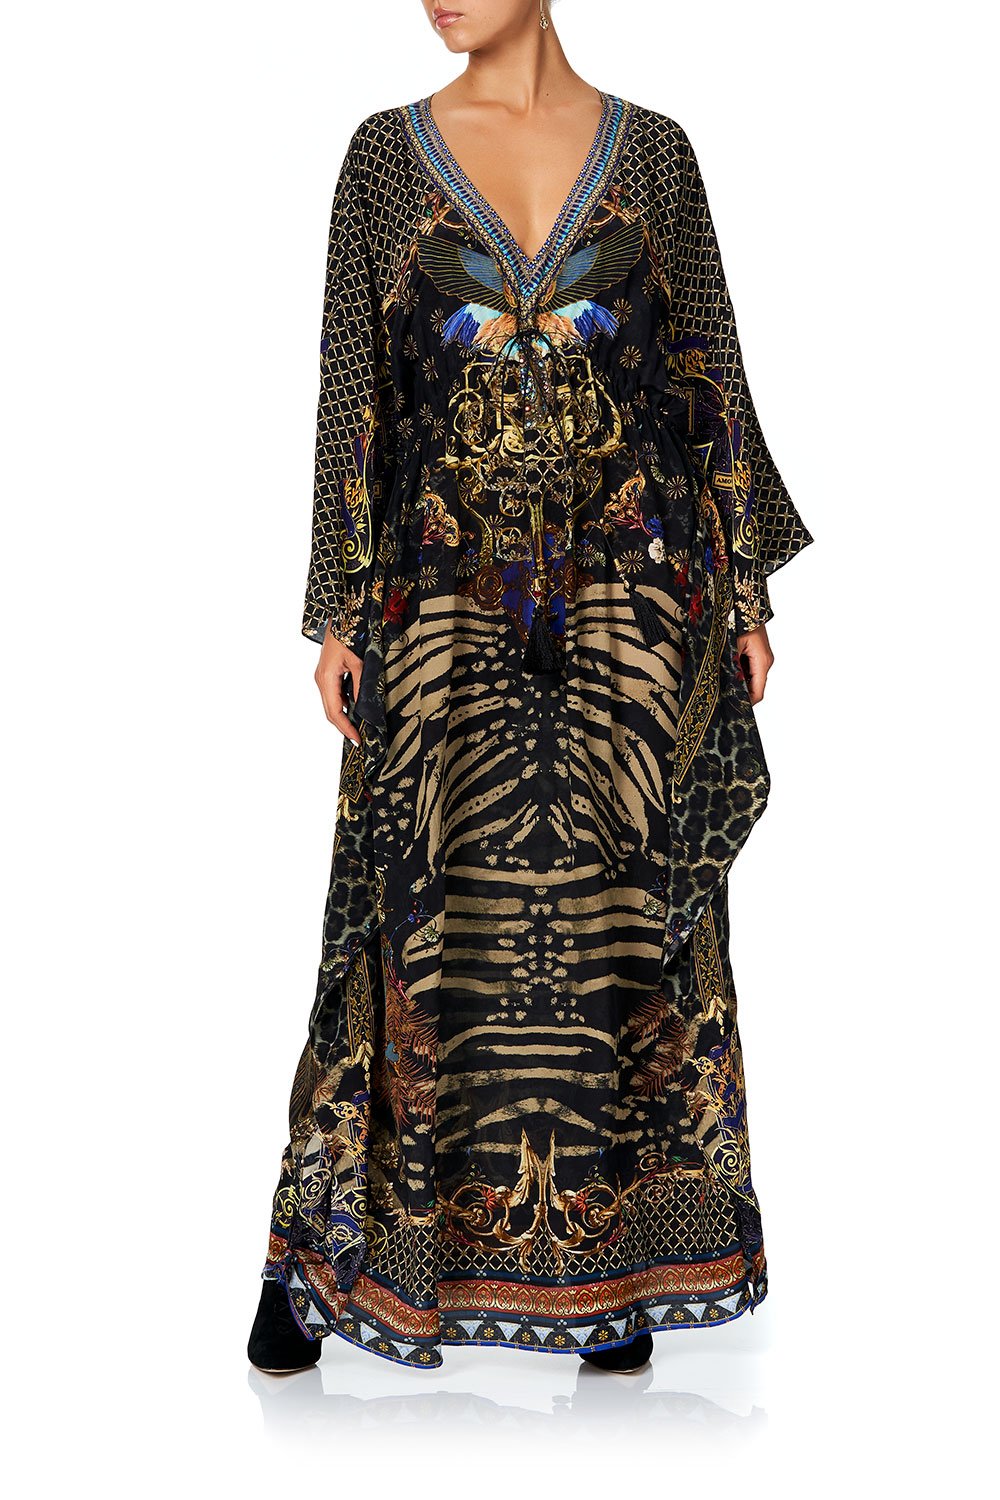 sunny girl leopard dress